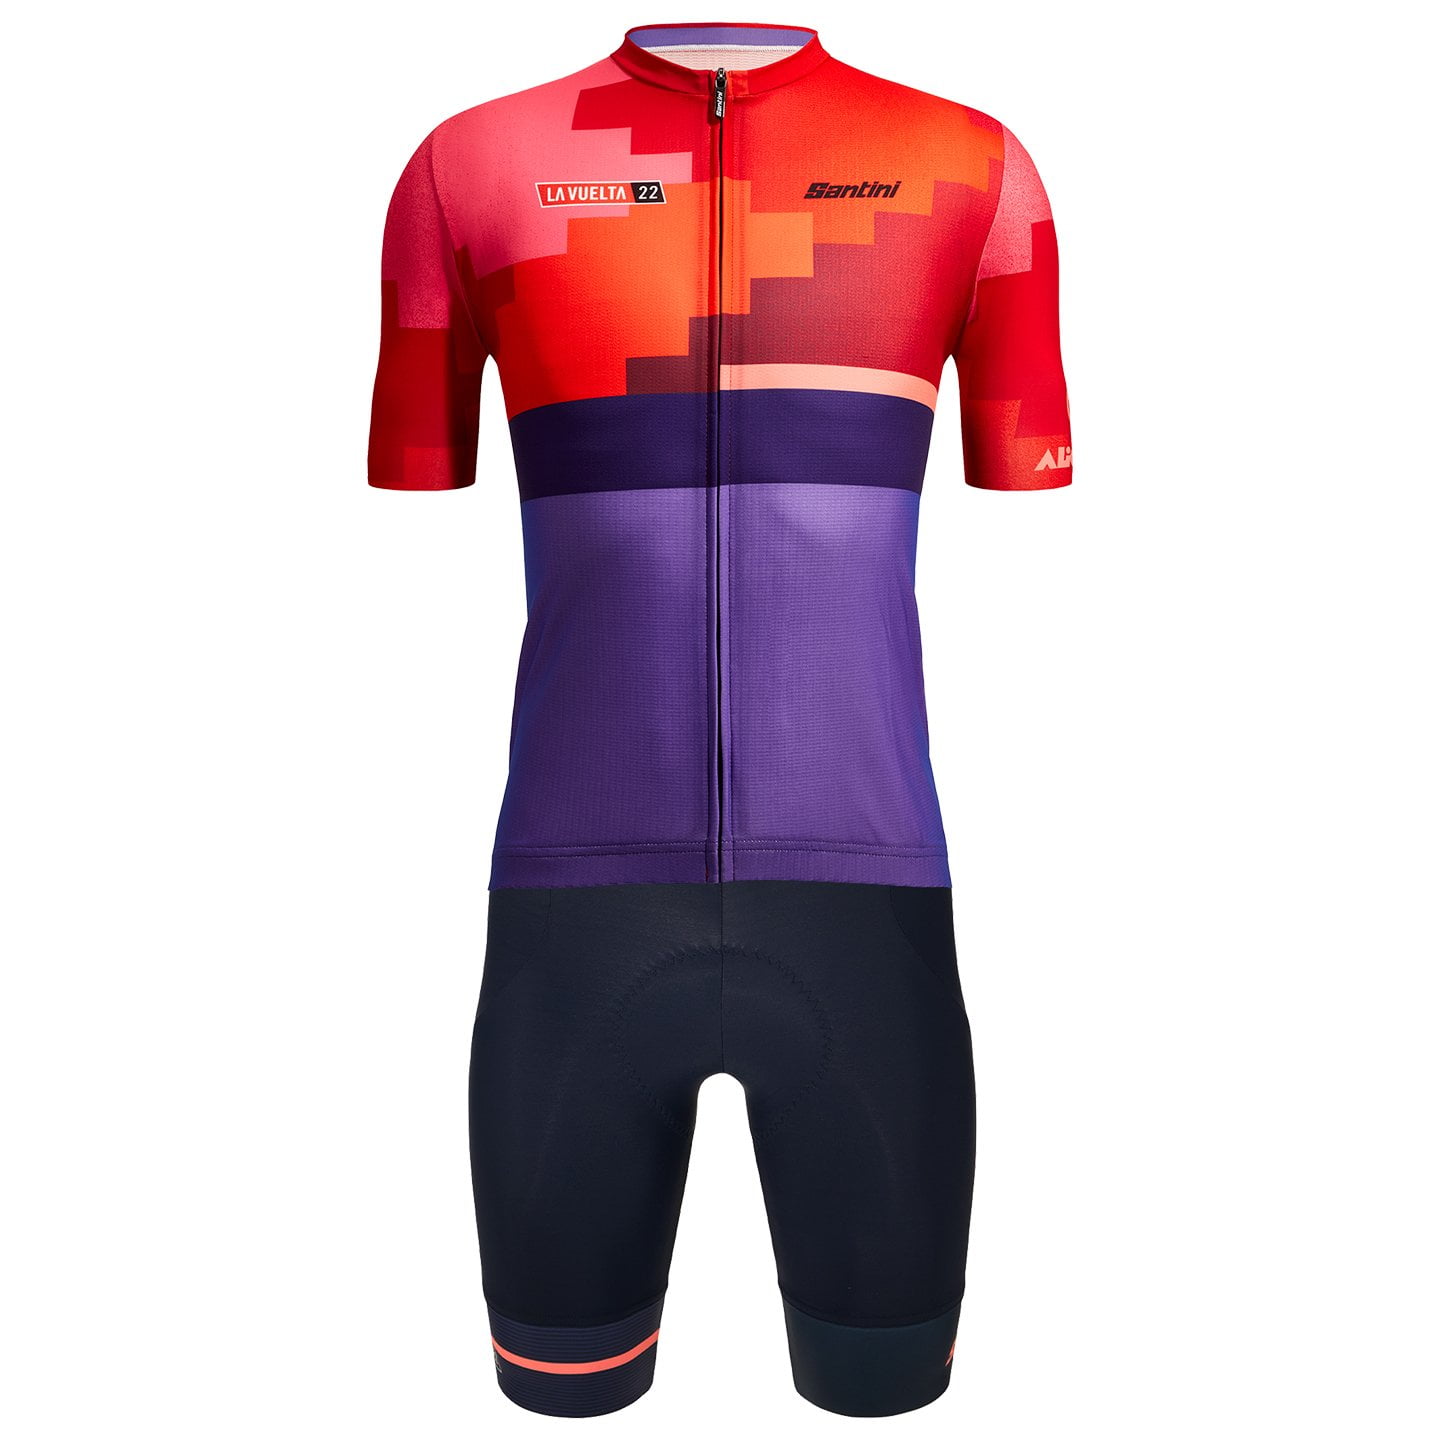 LA VUELTA Alicante 2022 Set (cycling jersey + cycling shorts) Set (2 pieces), for men, Cycling clothing